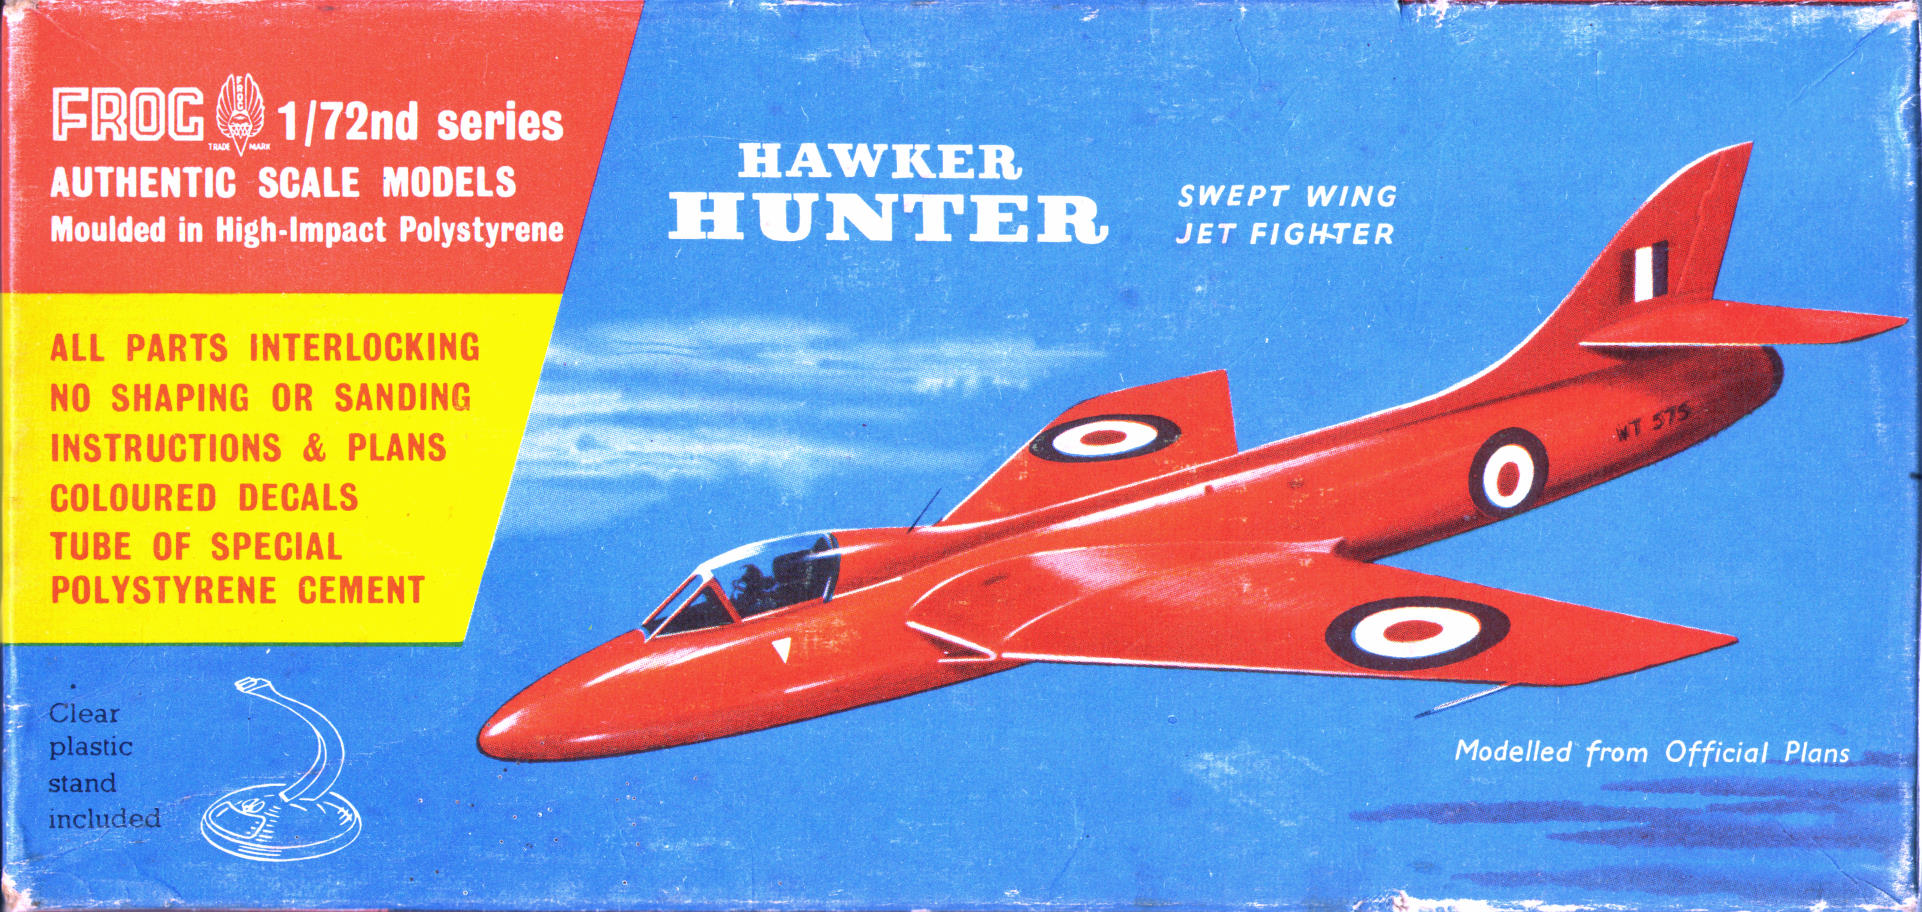 FROG 320P Hawker Hunter swept wing jet fighter, International Model Aircraft, April 1956, верх коробки